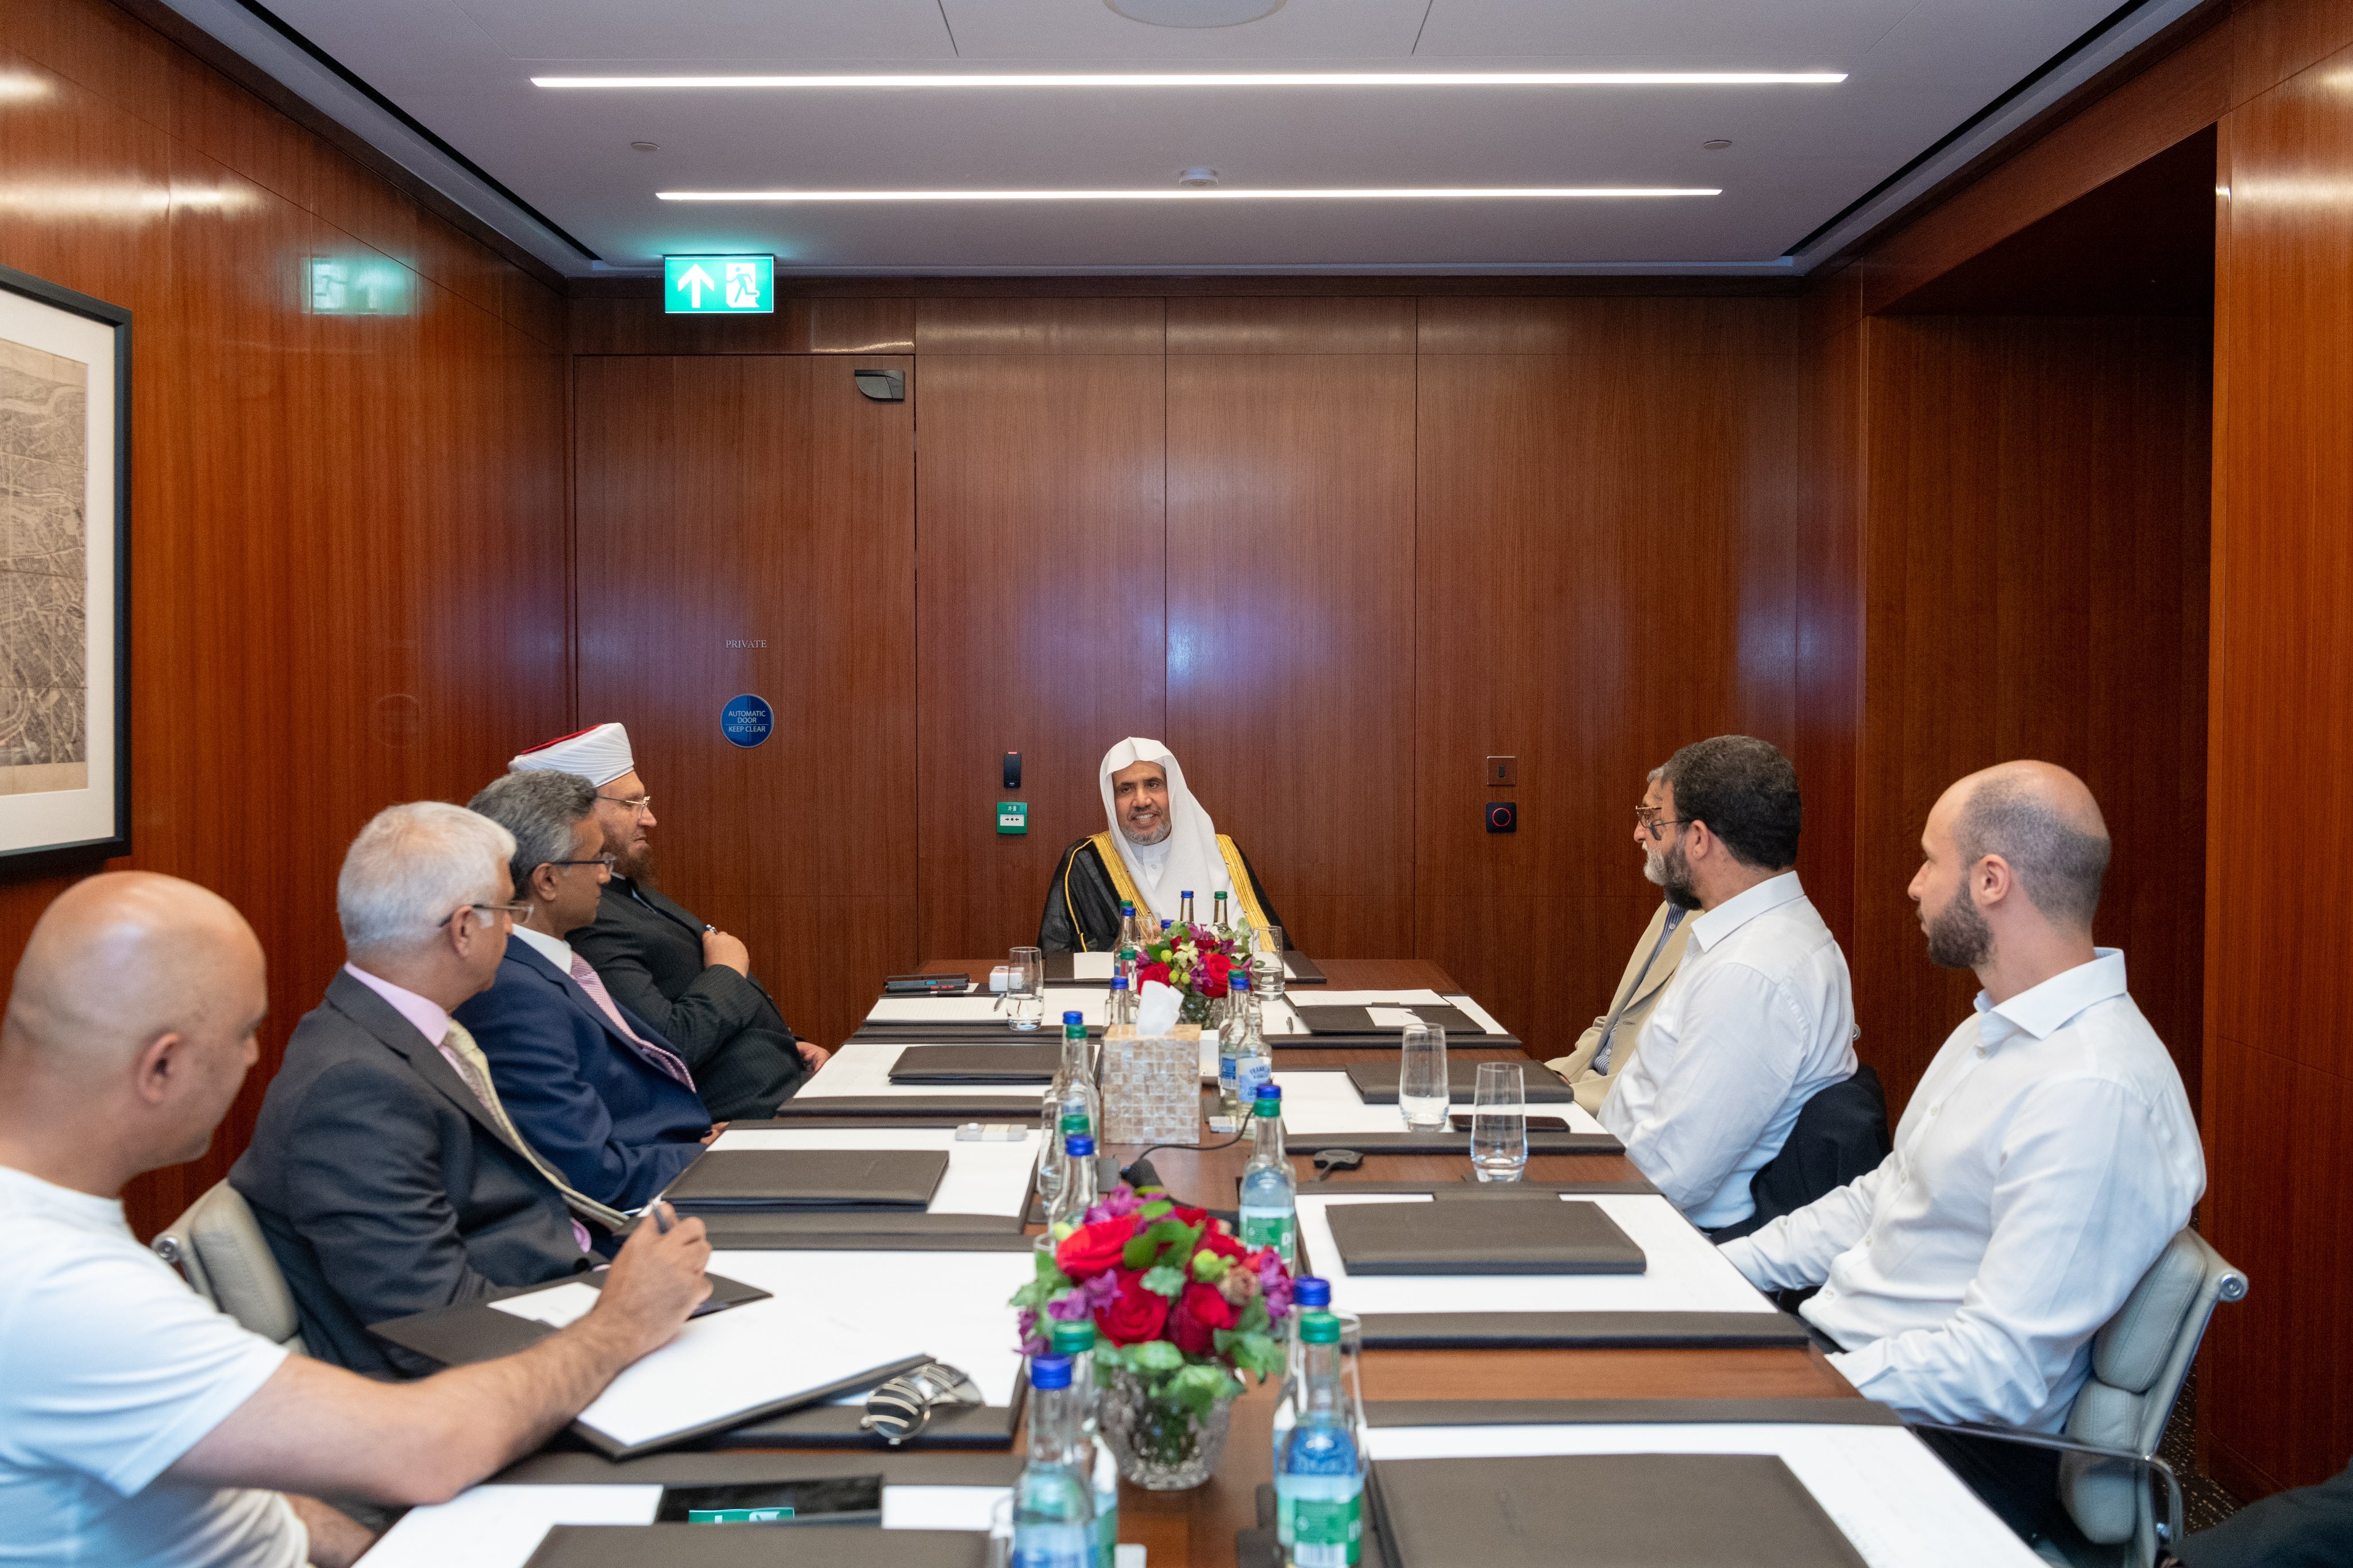 Yang Mulia Sekretaris Jenderal LMD, Ketua Asosiasi Ulama Muslim, Syekh Dr. Mohammed Alissa, bertemu dengan para pemimpin Islam Inggris di ibu kota, London.